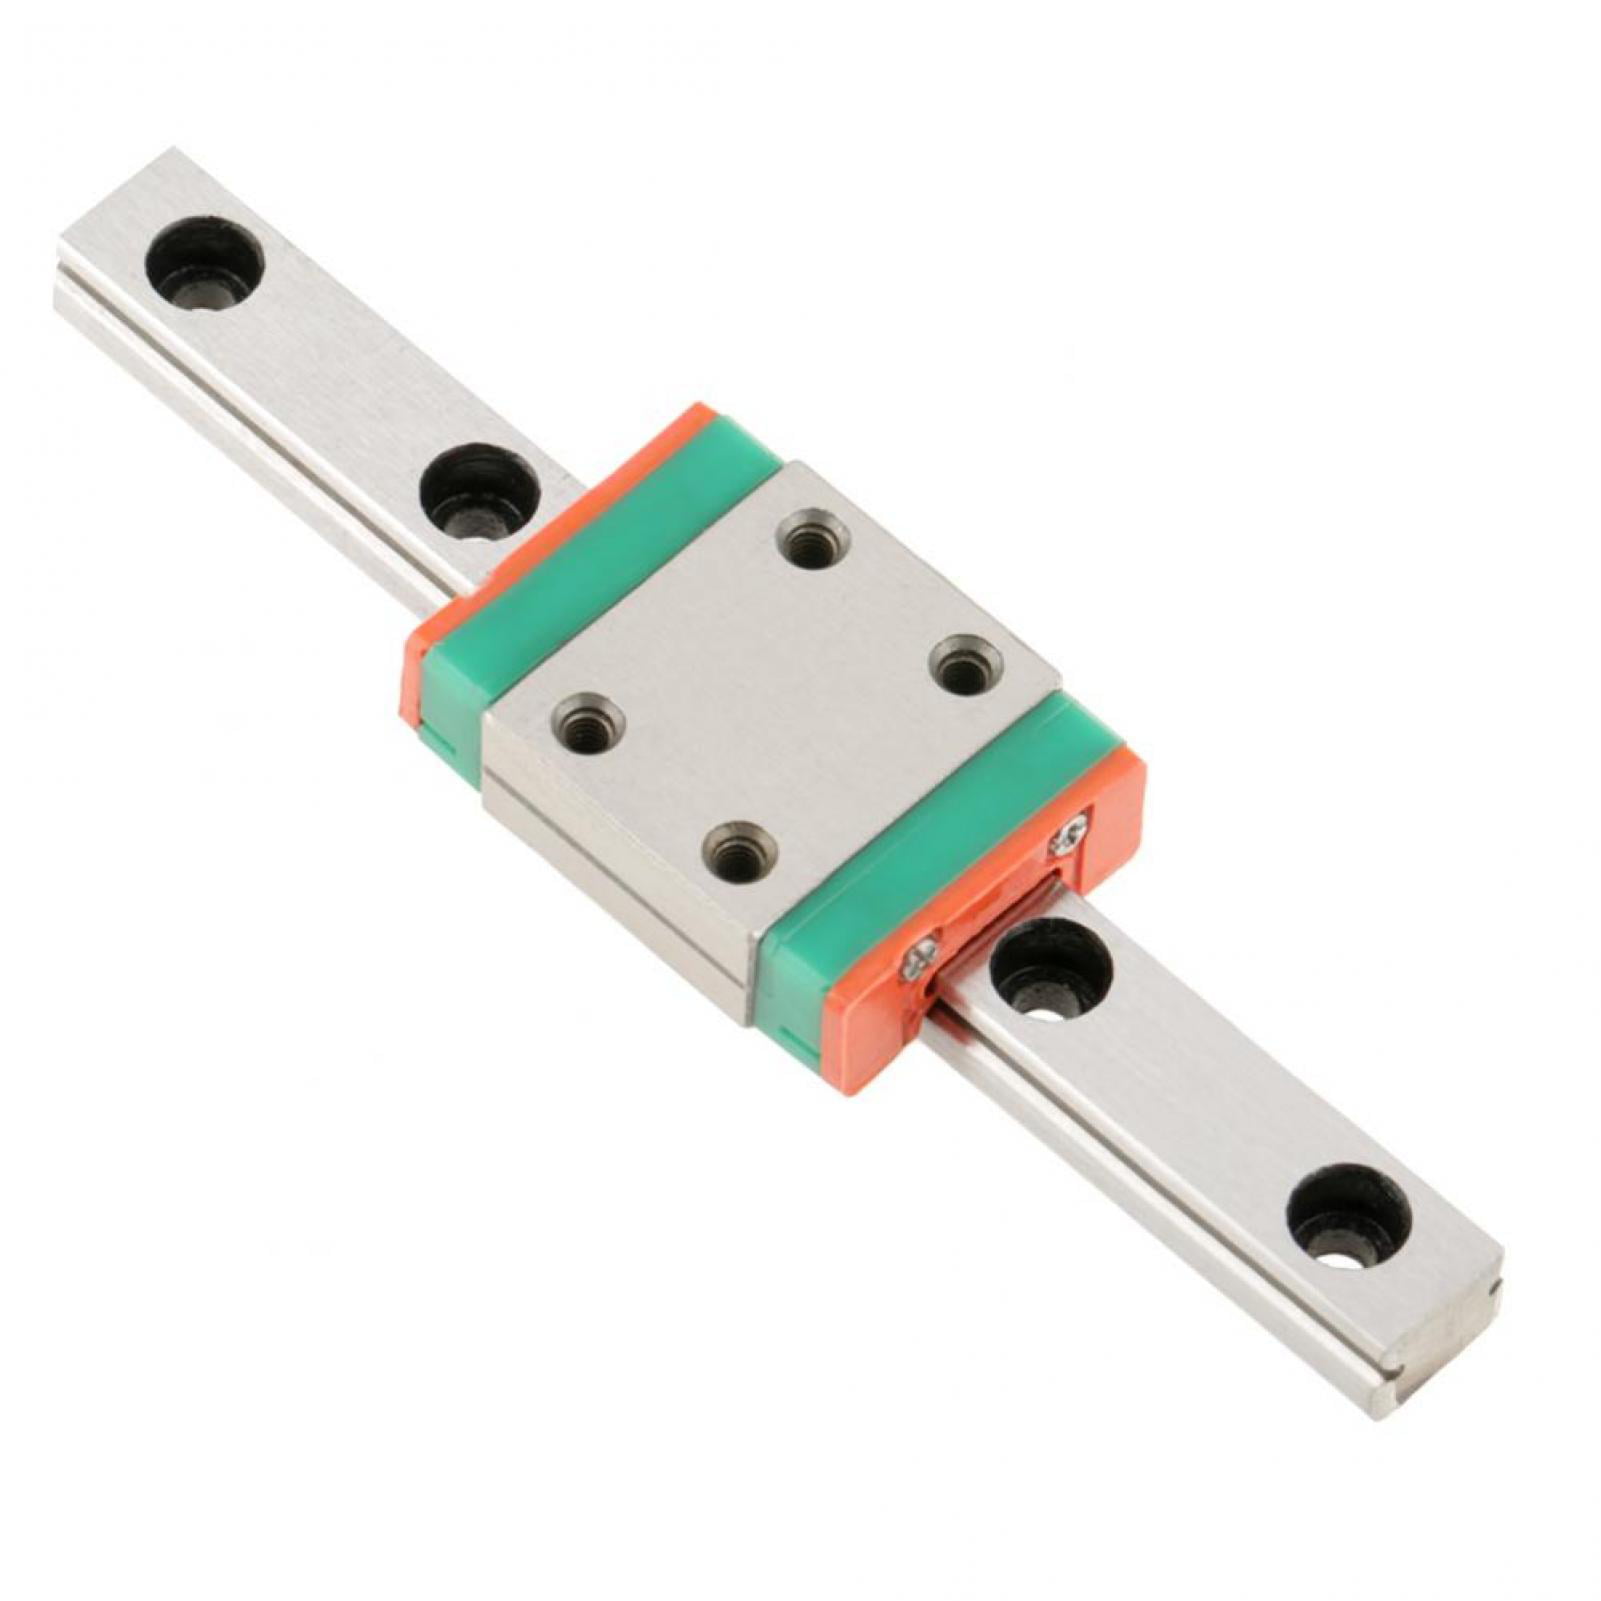 1pc LWL7B Miniature Linear Rail Guide 7mm Width 1pc Slide Block For DIY CNC GB 